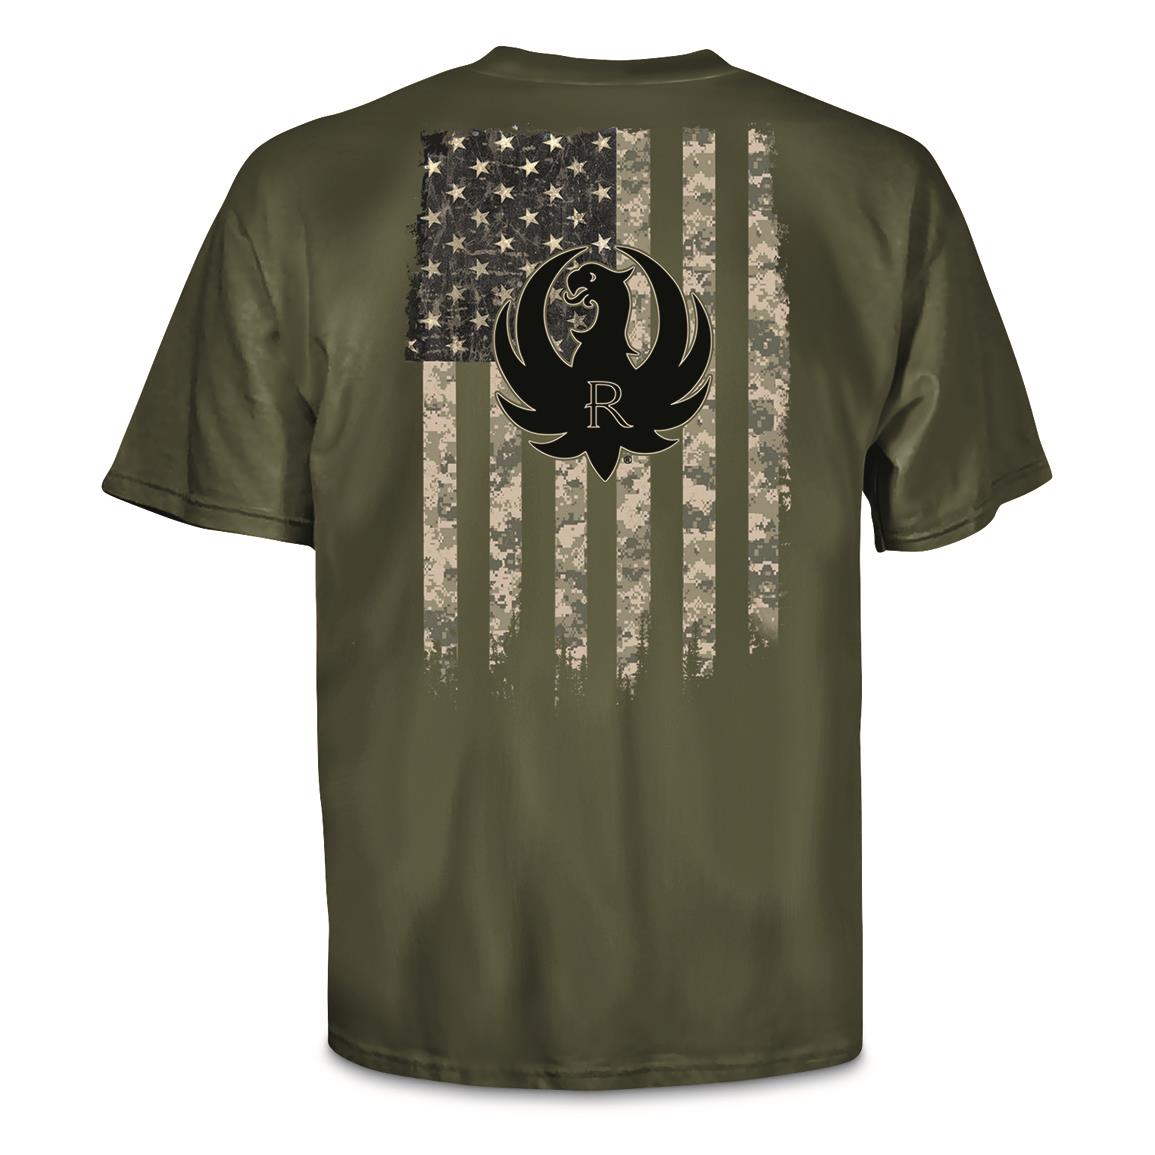 Ruger Men's Military Camo Logo Tee Shirt - 706253, T-Shirts at